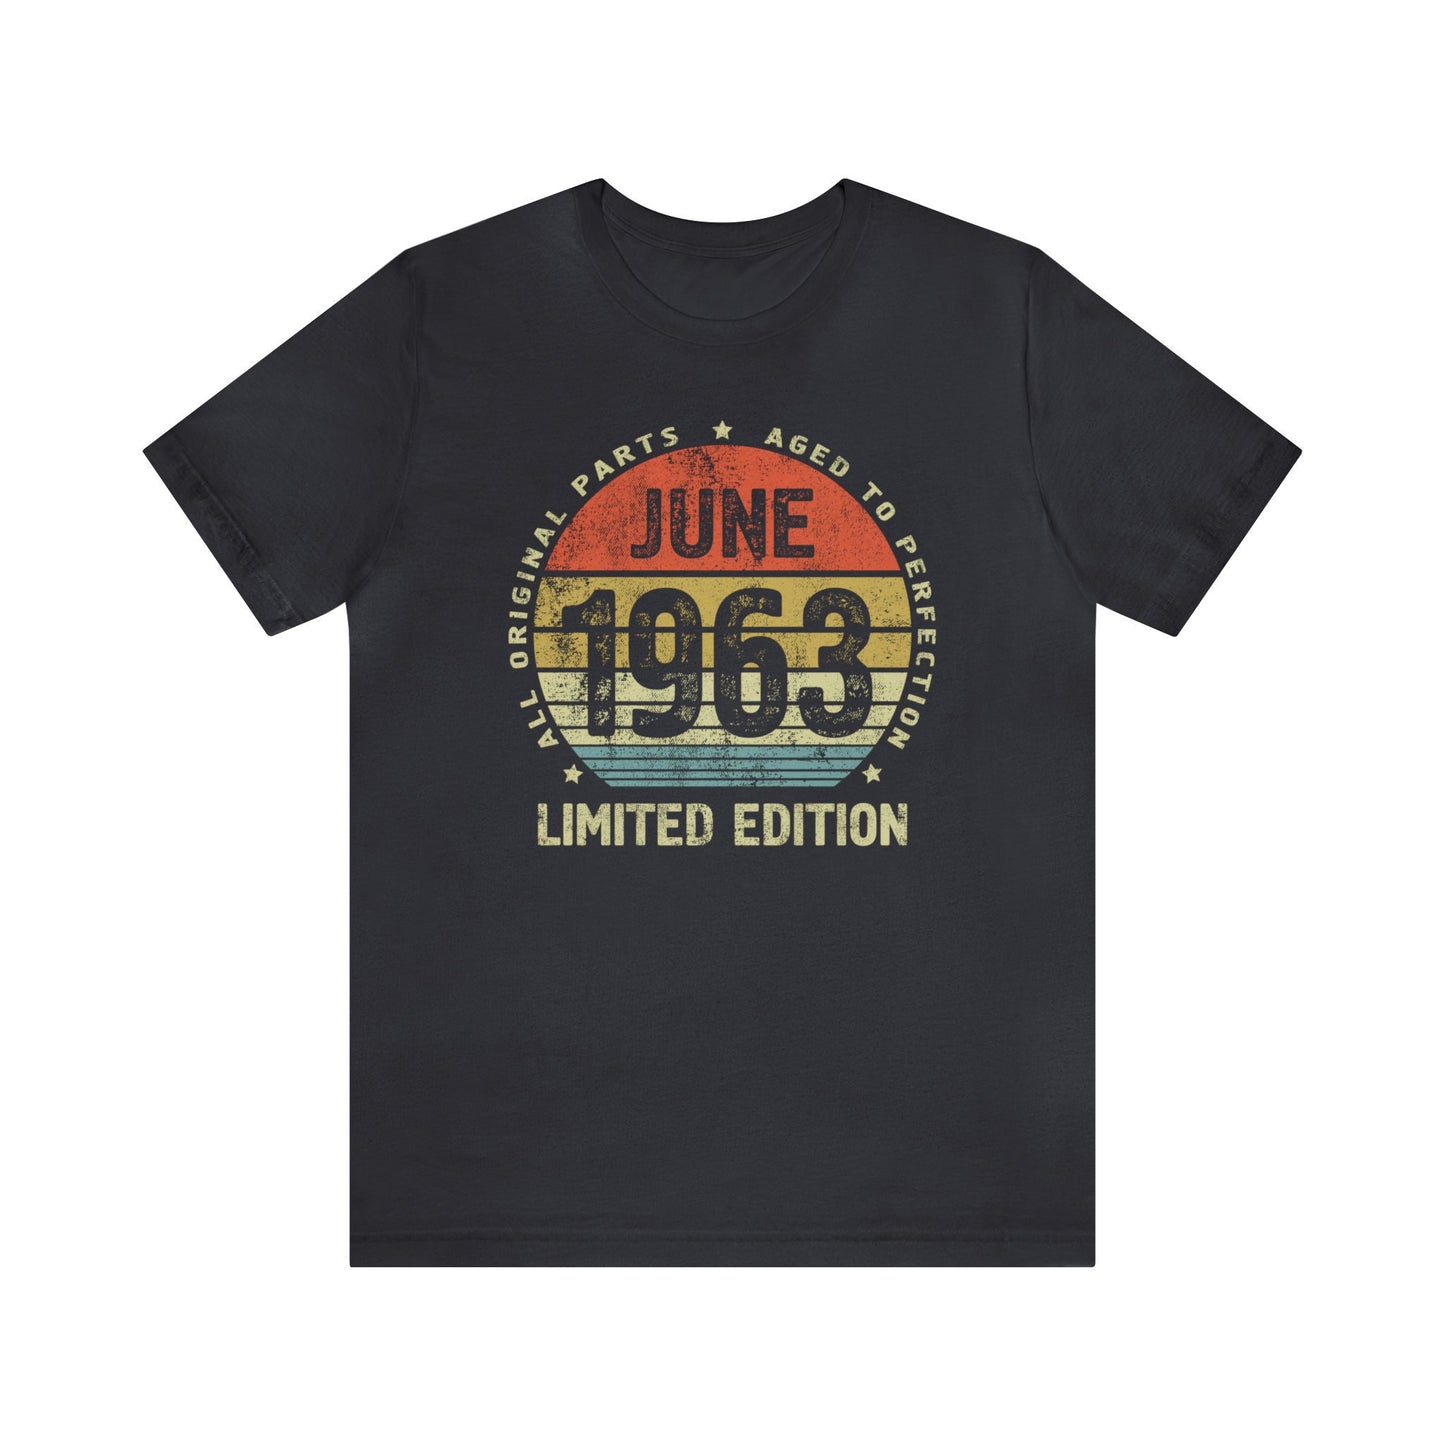 June 1963  birthday shirt for women or men, Gift shirt for wife or husband